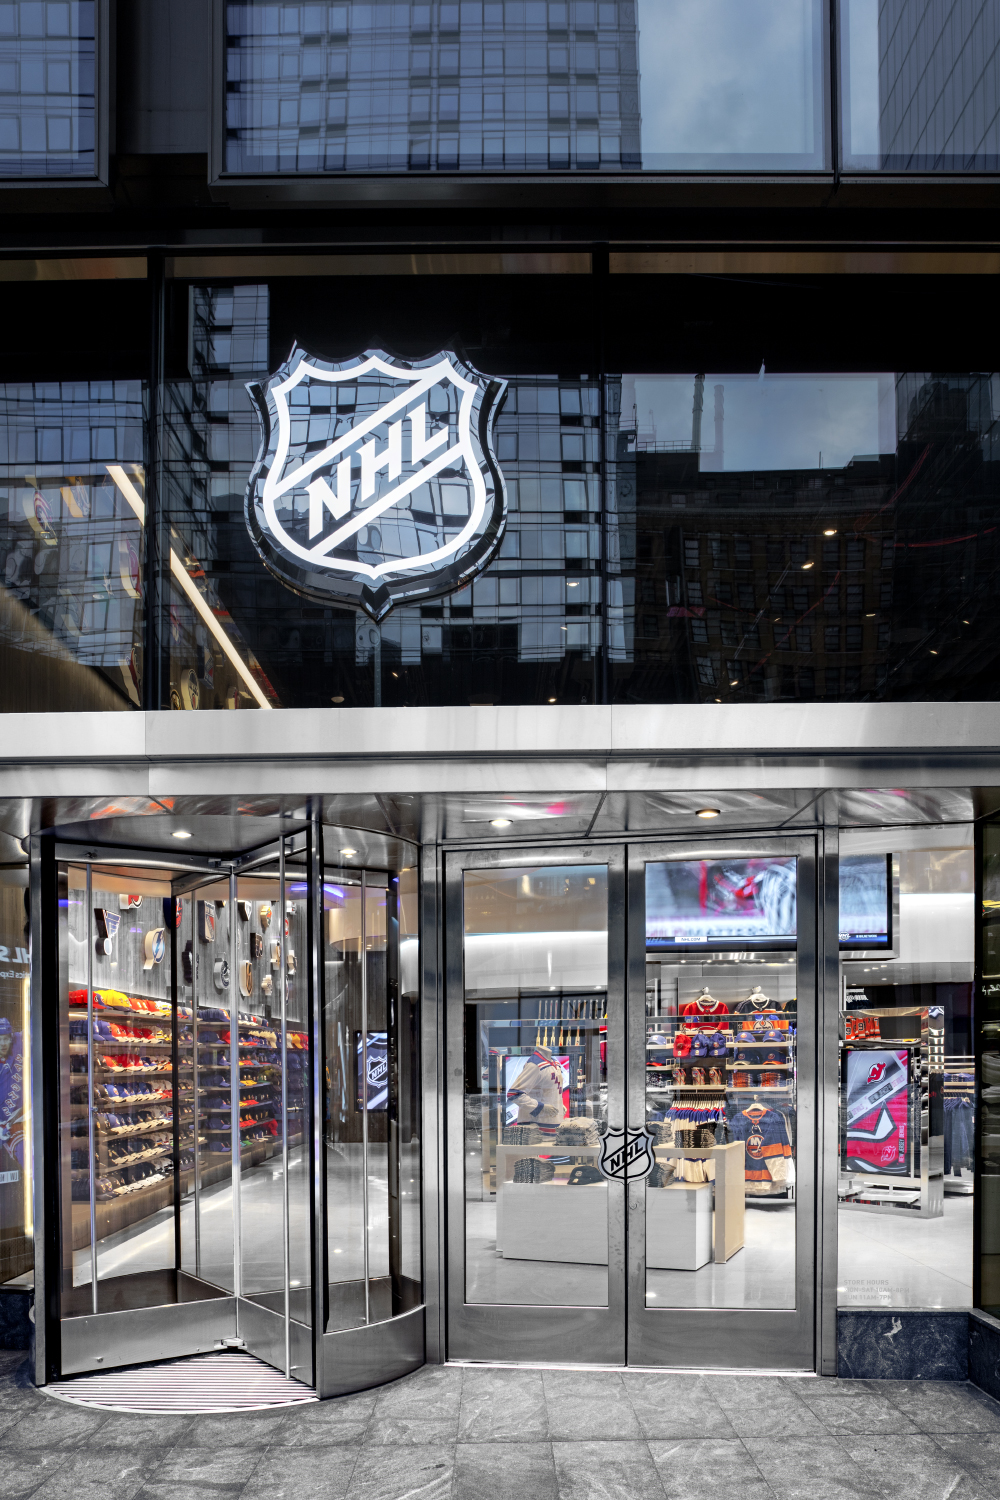 NHL Shop New York City